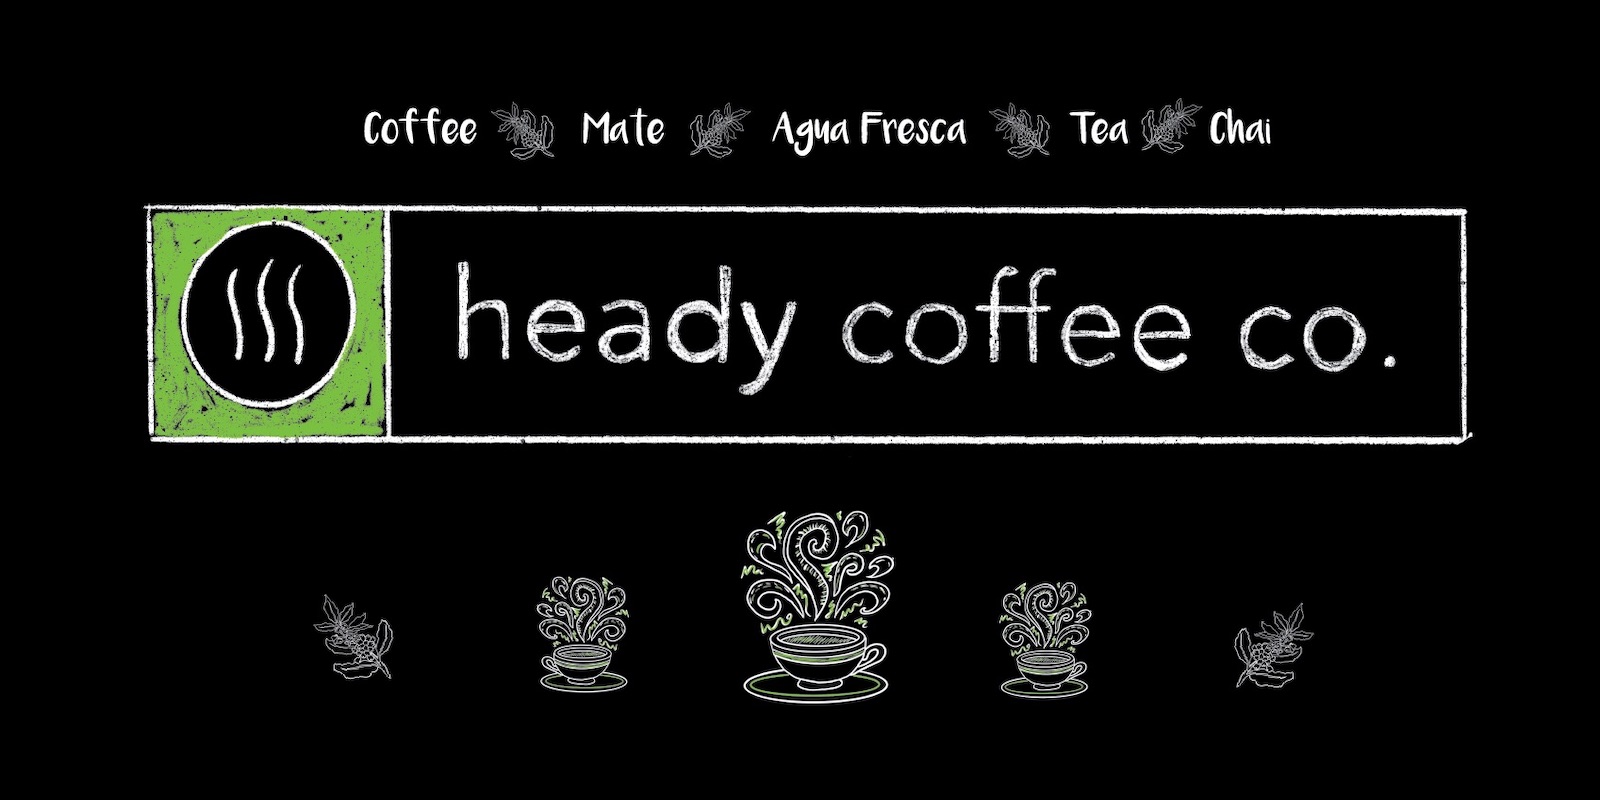 heady coffee co. web banner